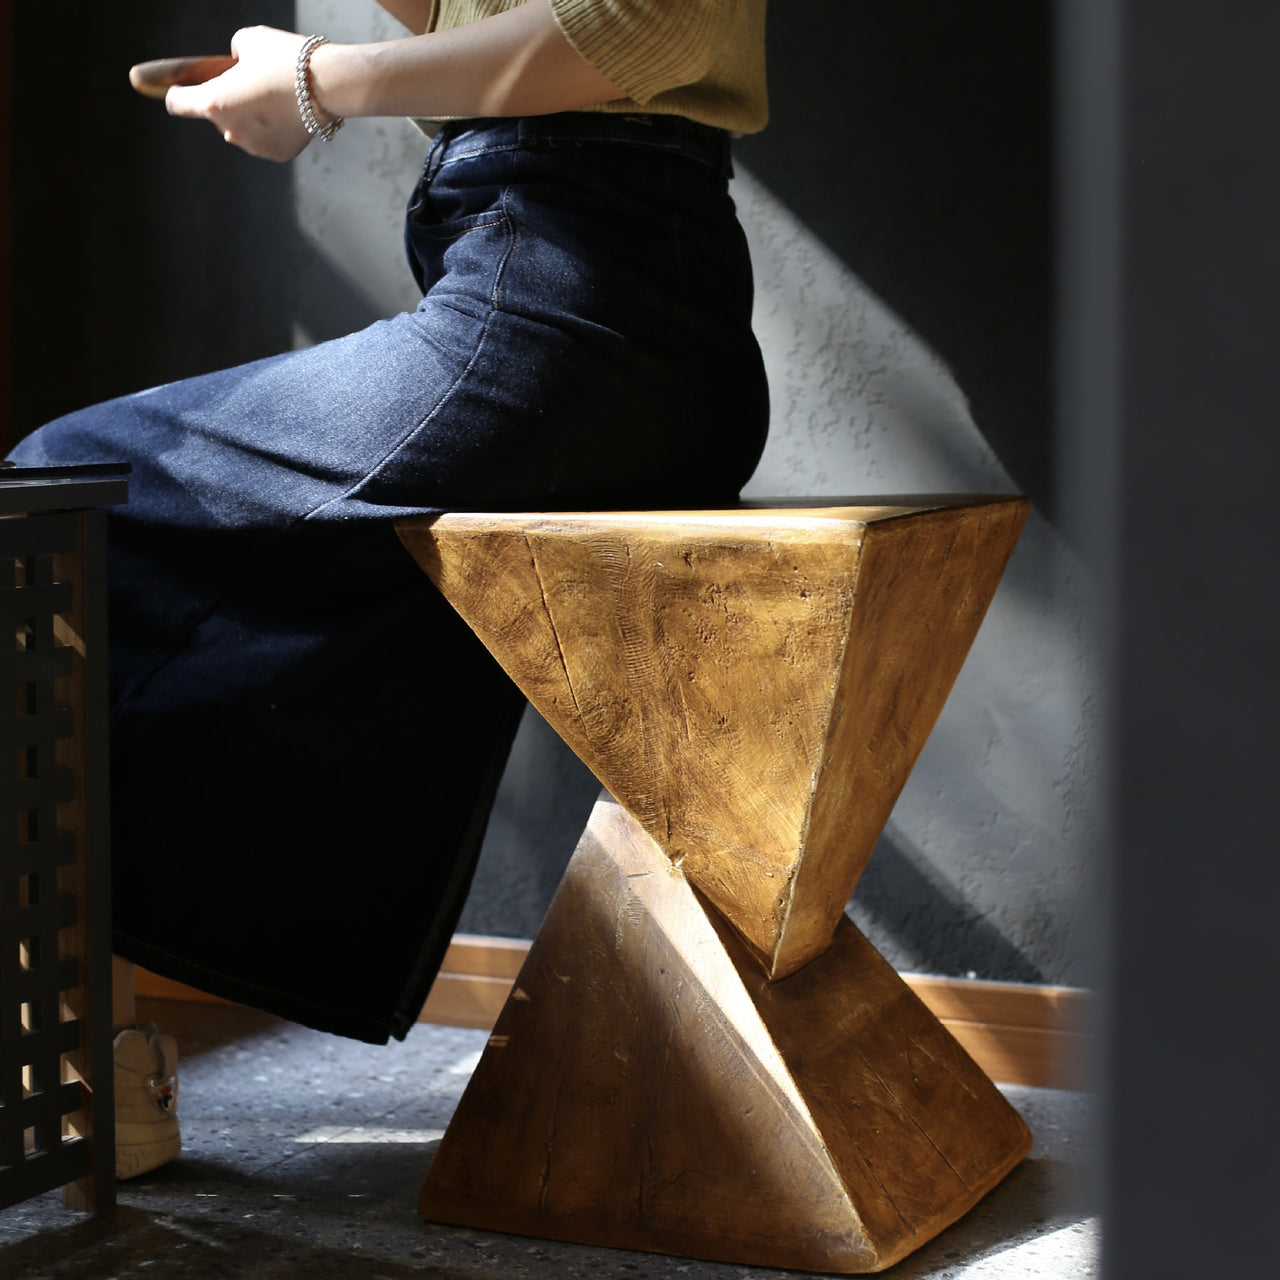 Nordic Design Edge Table, Minimalist Geometric Coffee Table